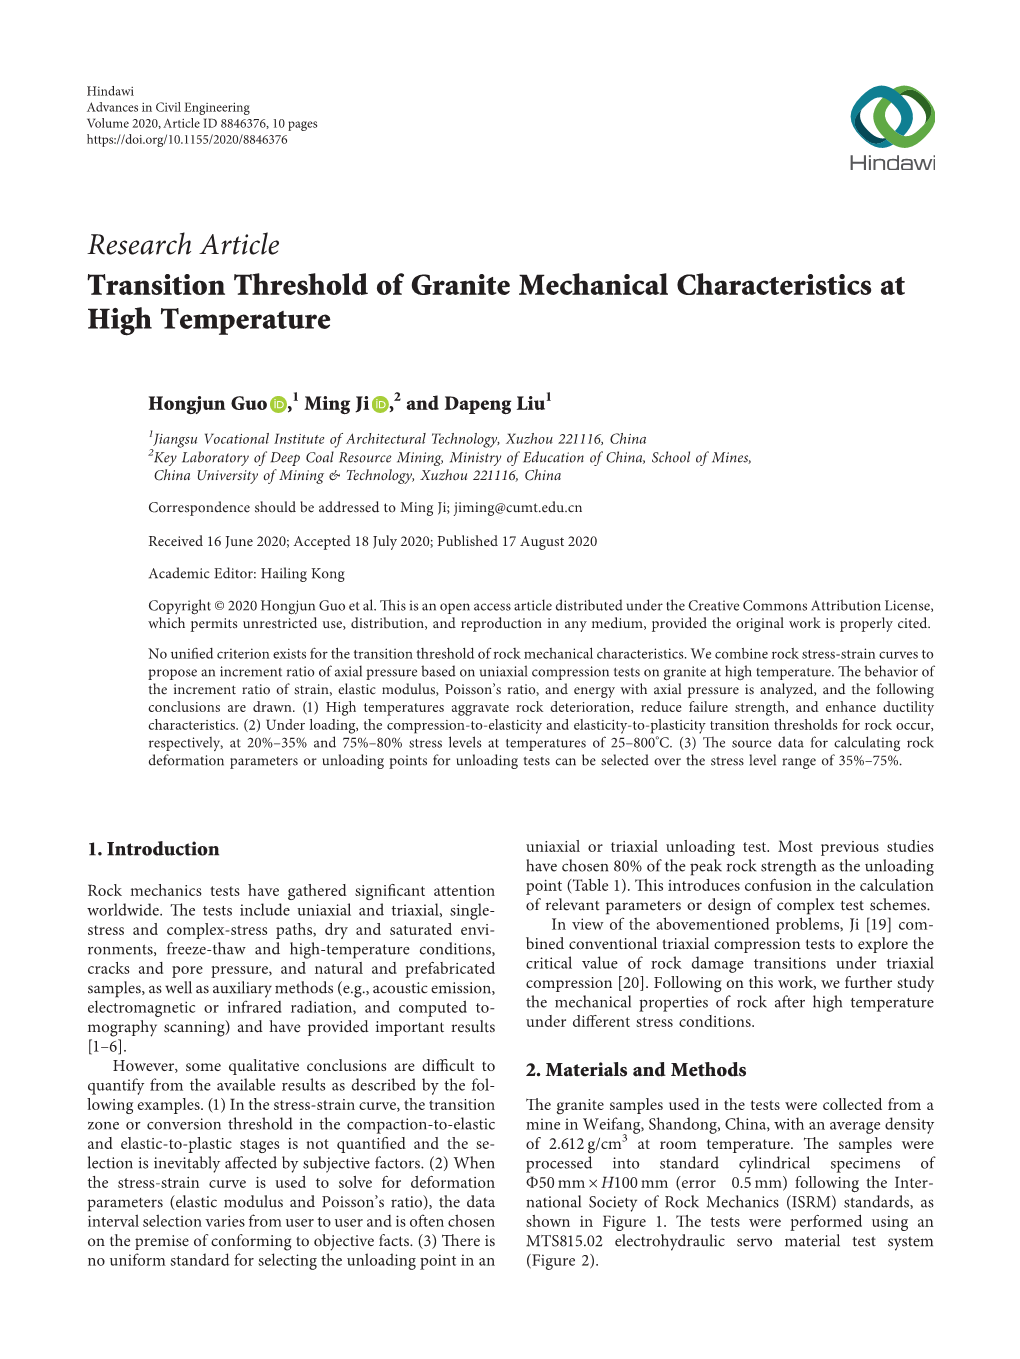 Transition Threshold of Granite Mechanical Characteristics at High Temperature